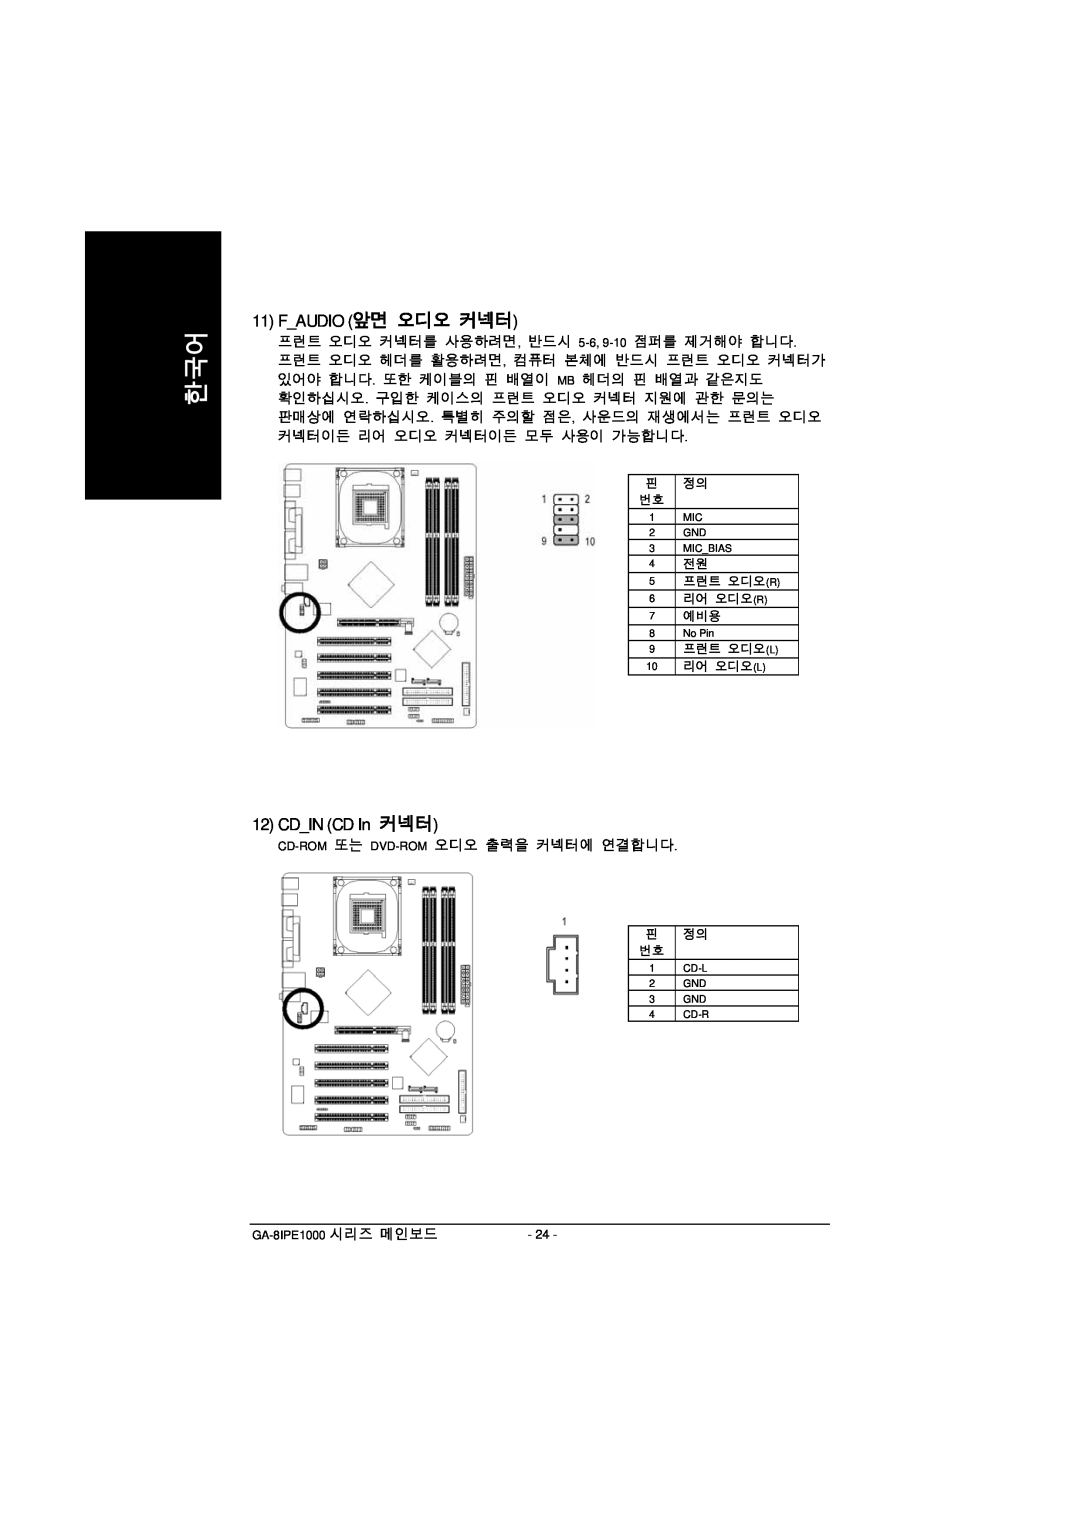 Intel GA-8IPE1000 manual Faudio 앞면 오디오 커넥터, CDIN CD In 커넥터 